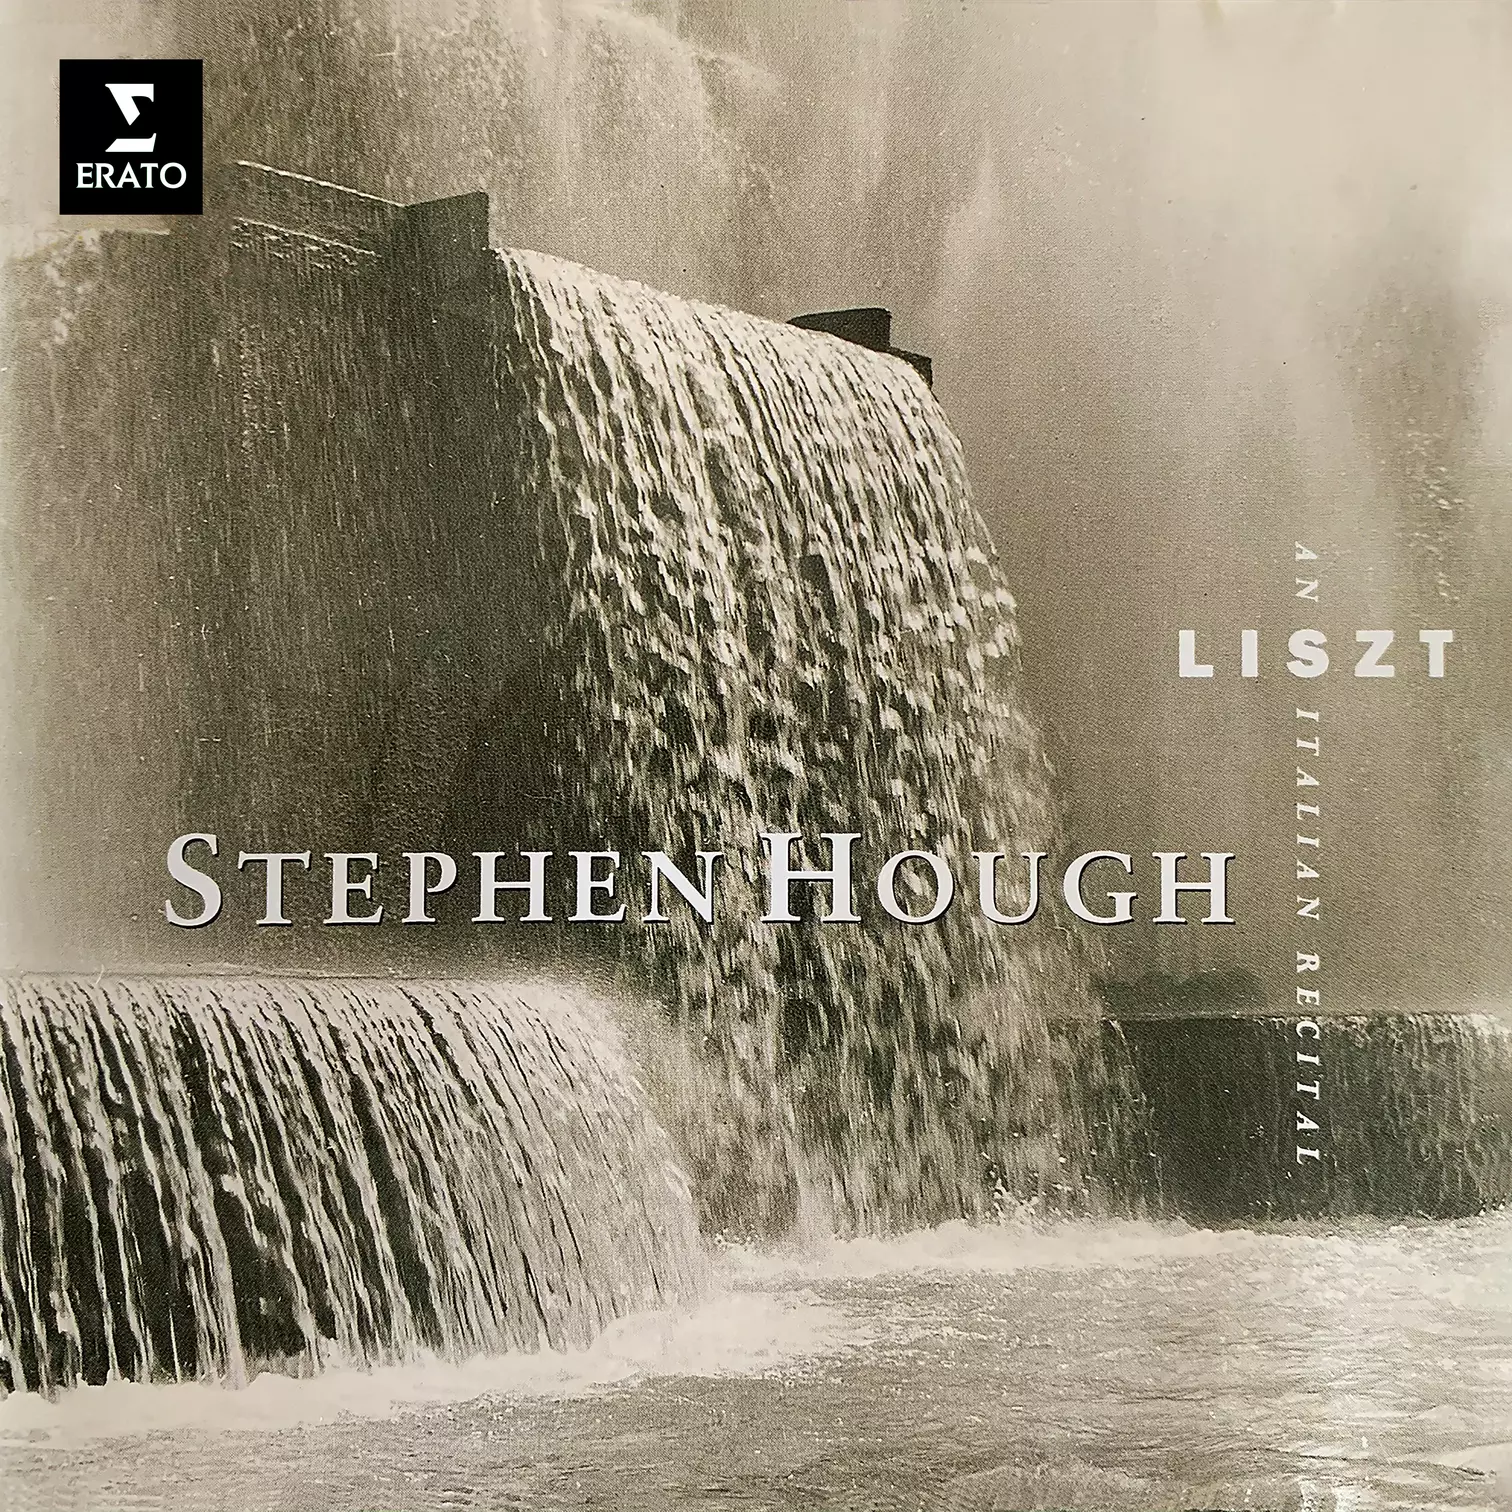 Liszt: An Italian Recital